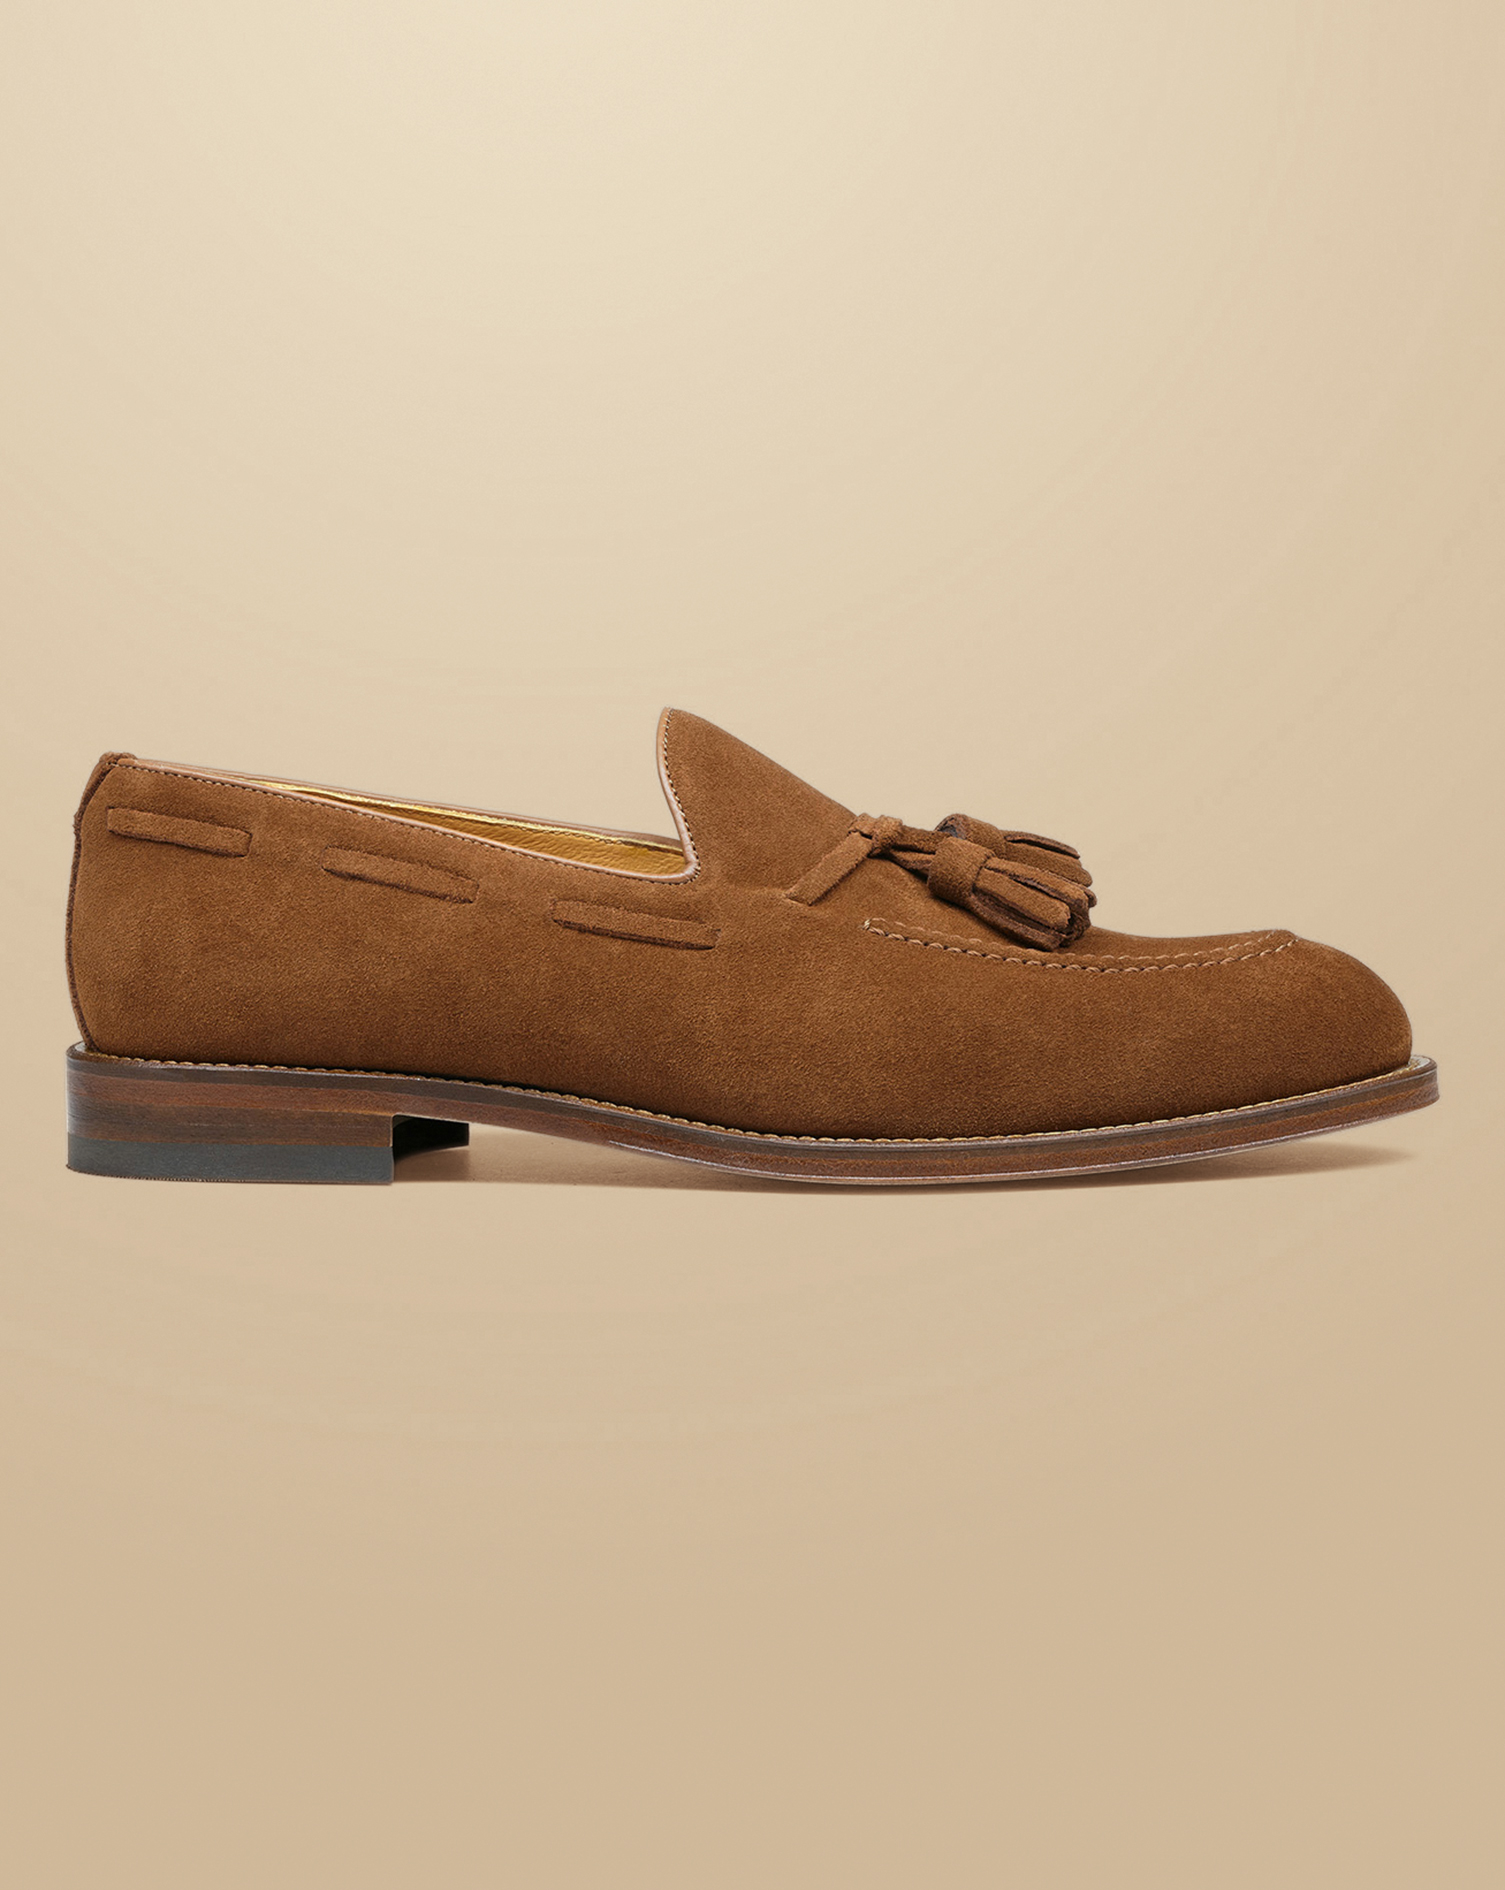 Men's Charles Tyrwhitt Tassel Loafers - Chestnut Brown Size 8 Suede
